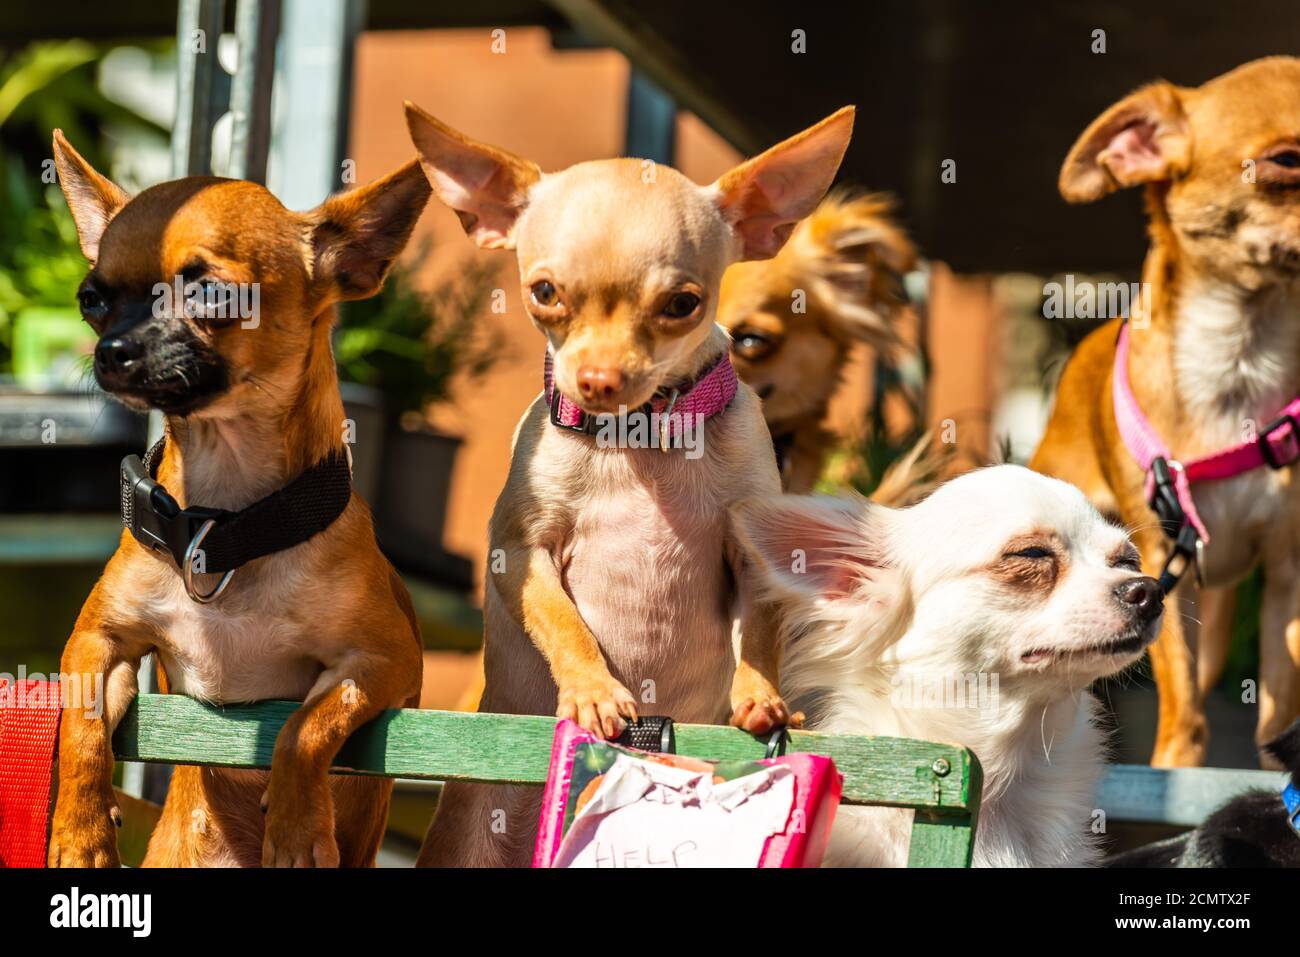 London, United Kingdom - September 13, 2020: Columbia Road Flower Sunday market. Chihuahua dogs on plants stalls Stock Photo